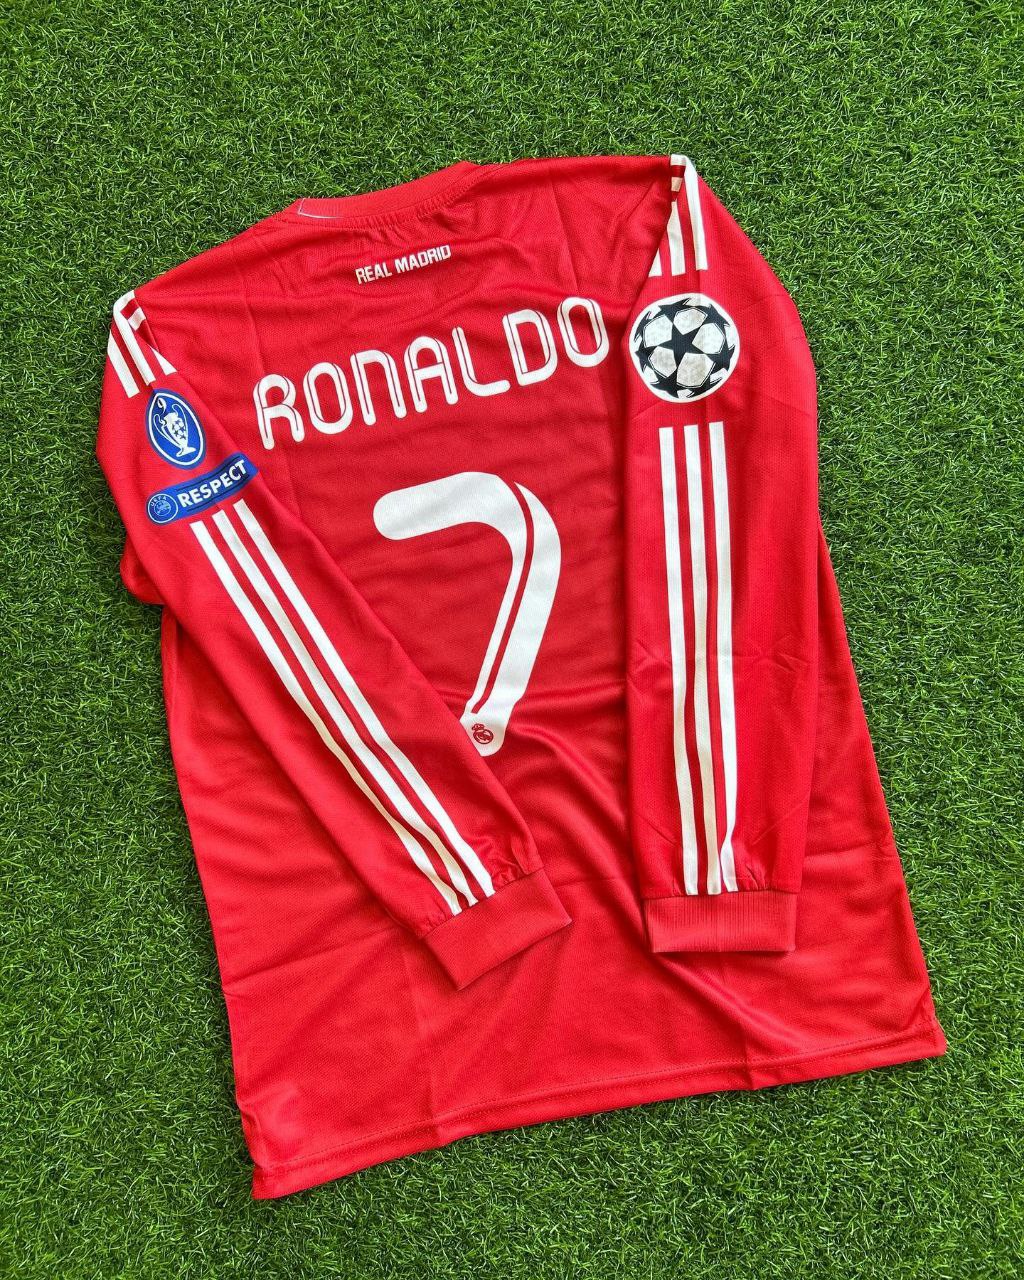 Cristiano Ronaldo Real Madrid Rotes Retro-Trikot